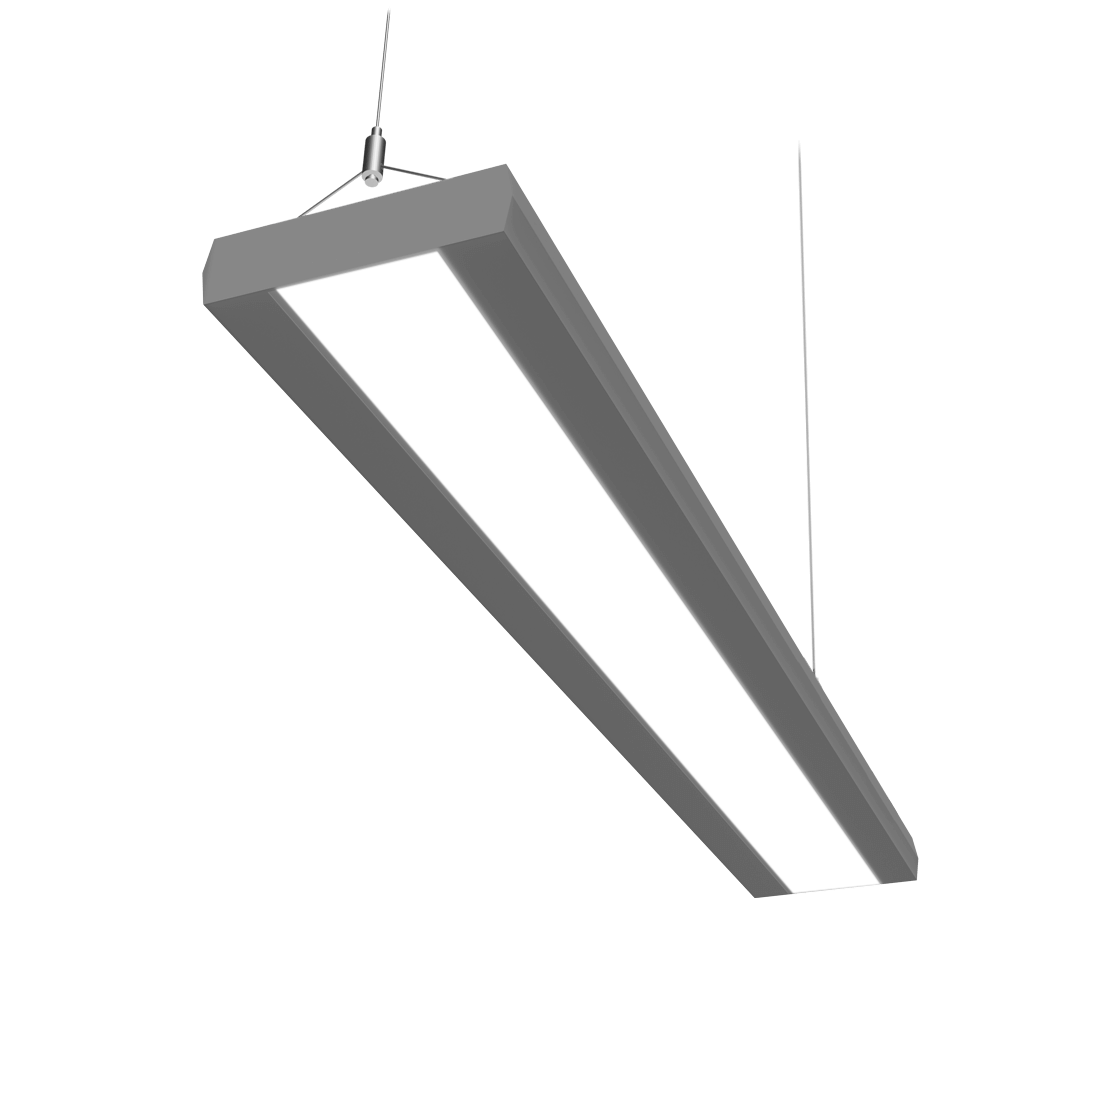 Grey low profile pendant LED light fixture